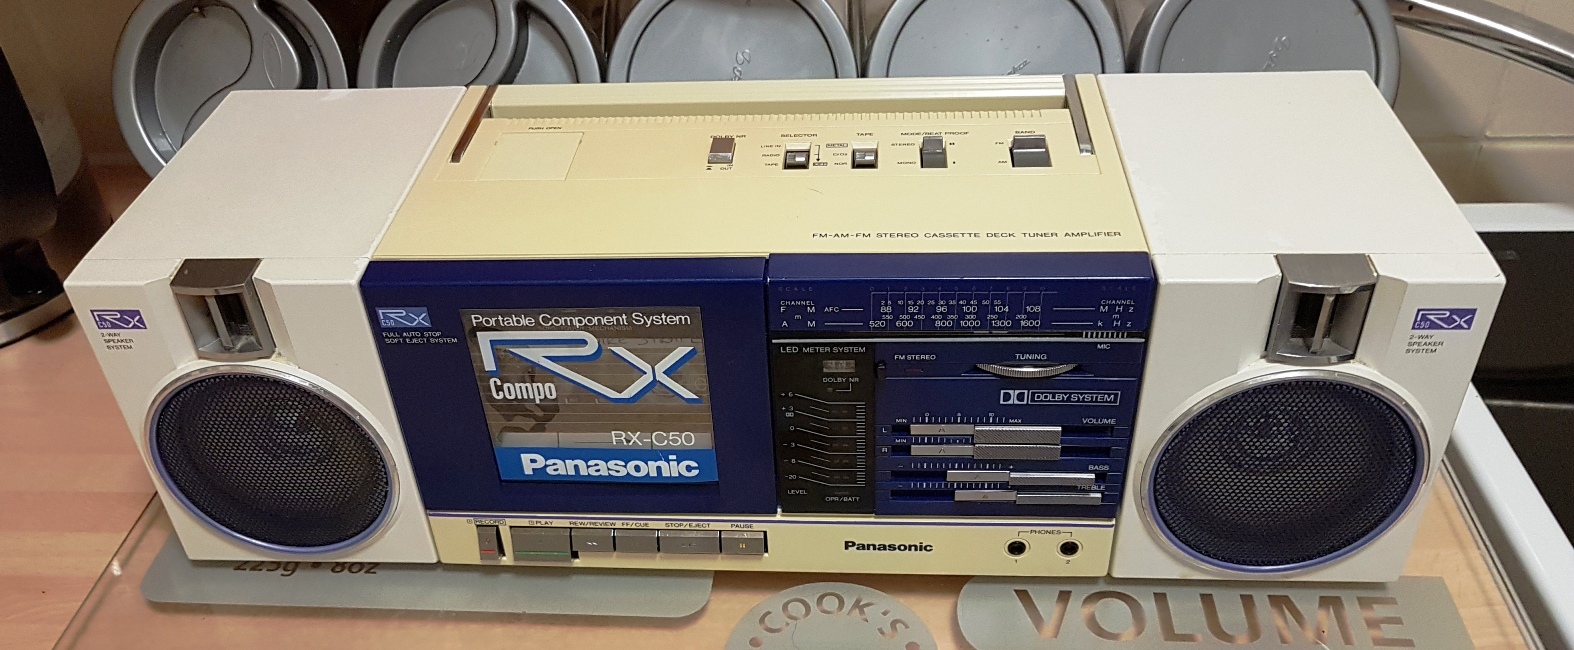 Panasonic RX-C50 Radio Cassette Recorder - March 2018 (3).jpg